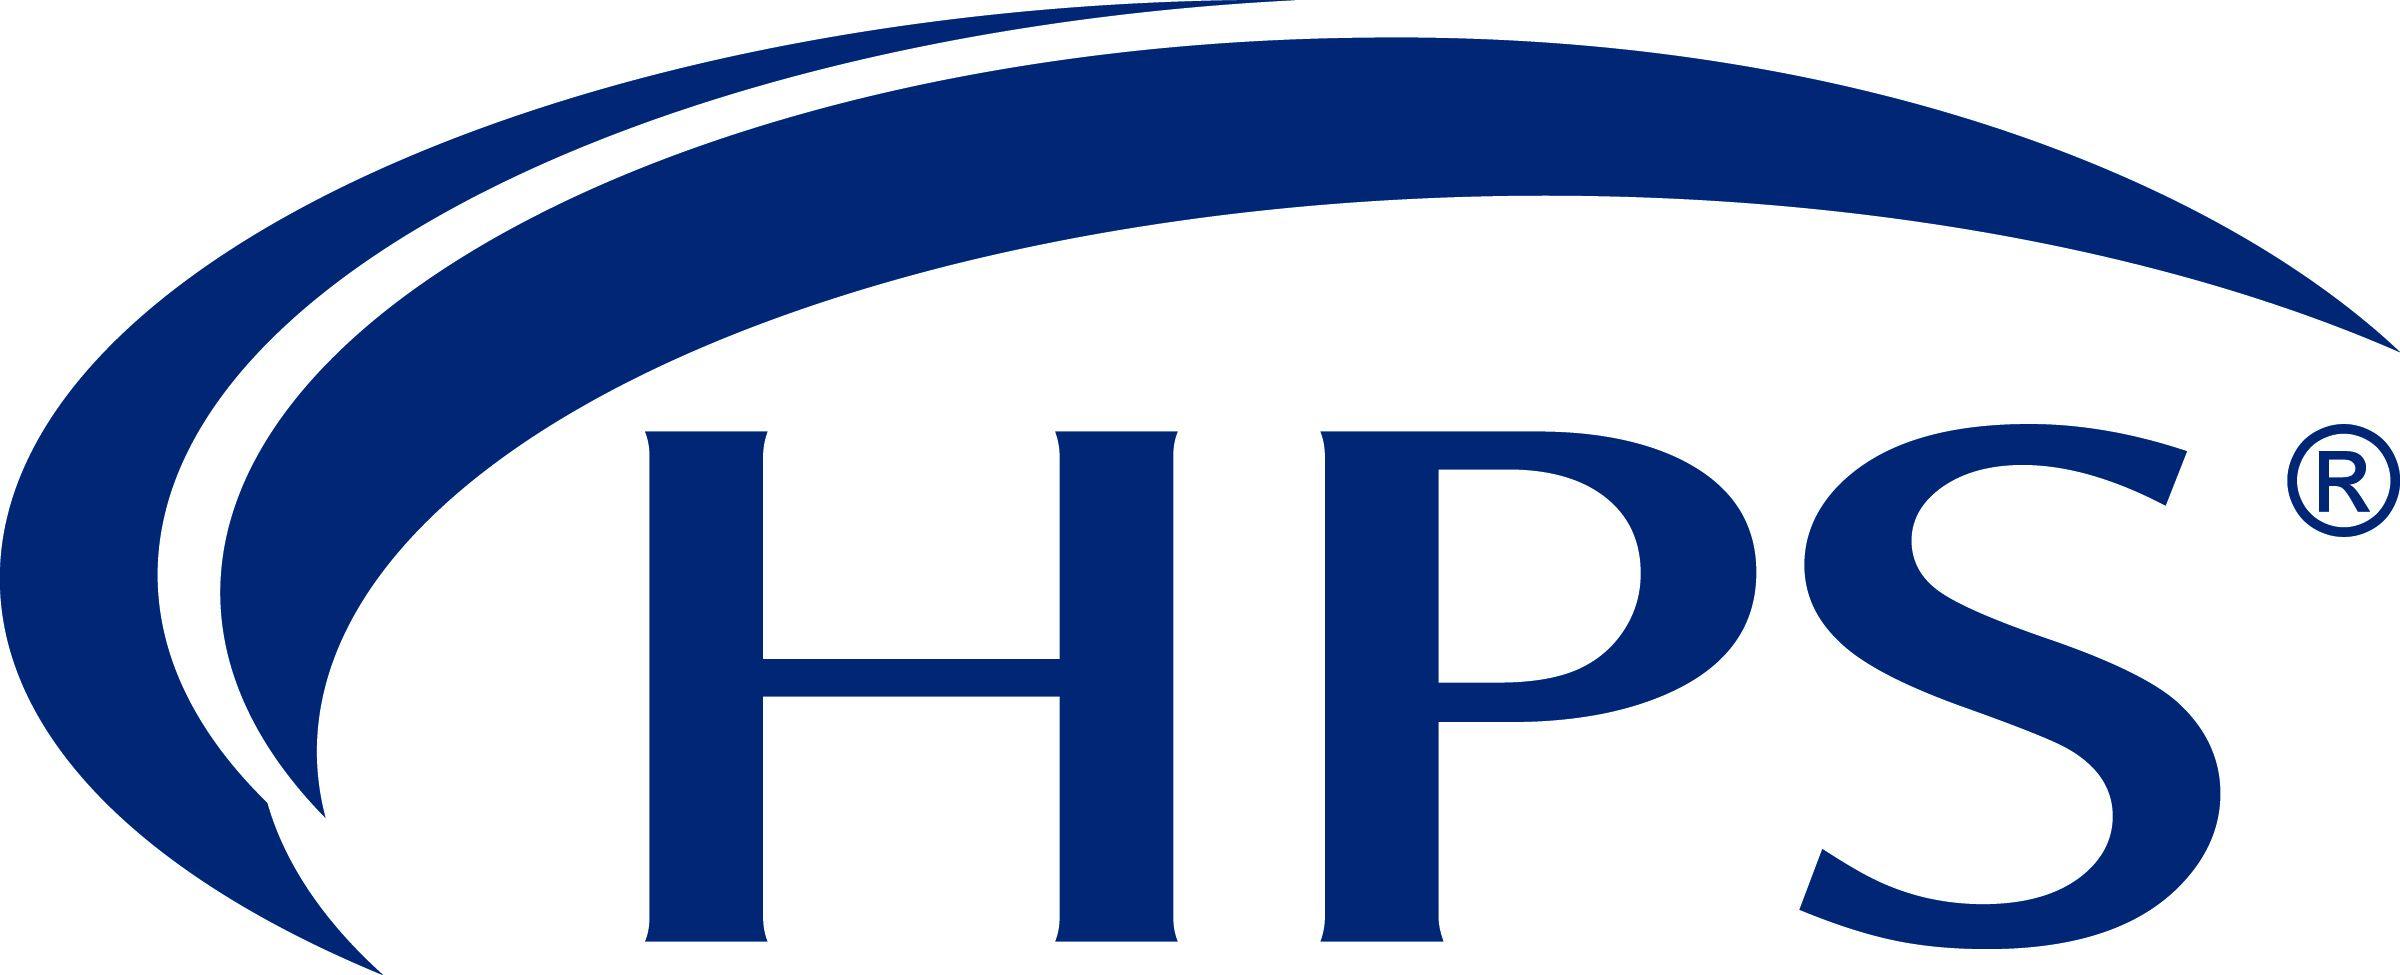 Adelpo Logo - List of Current Vendors | HPS